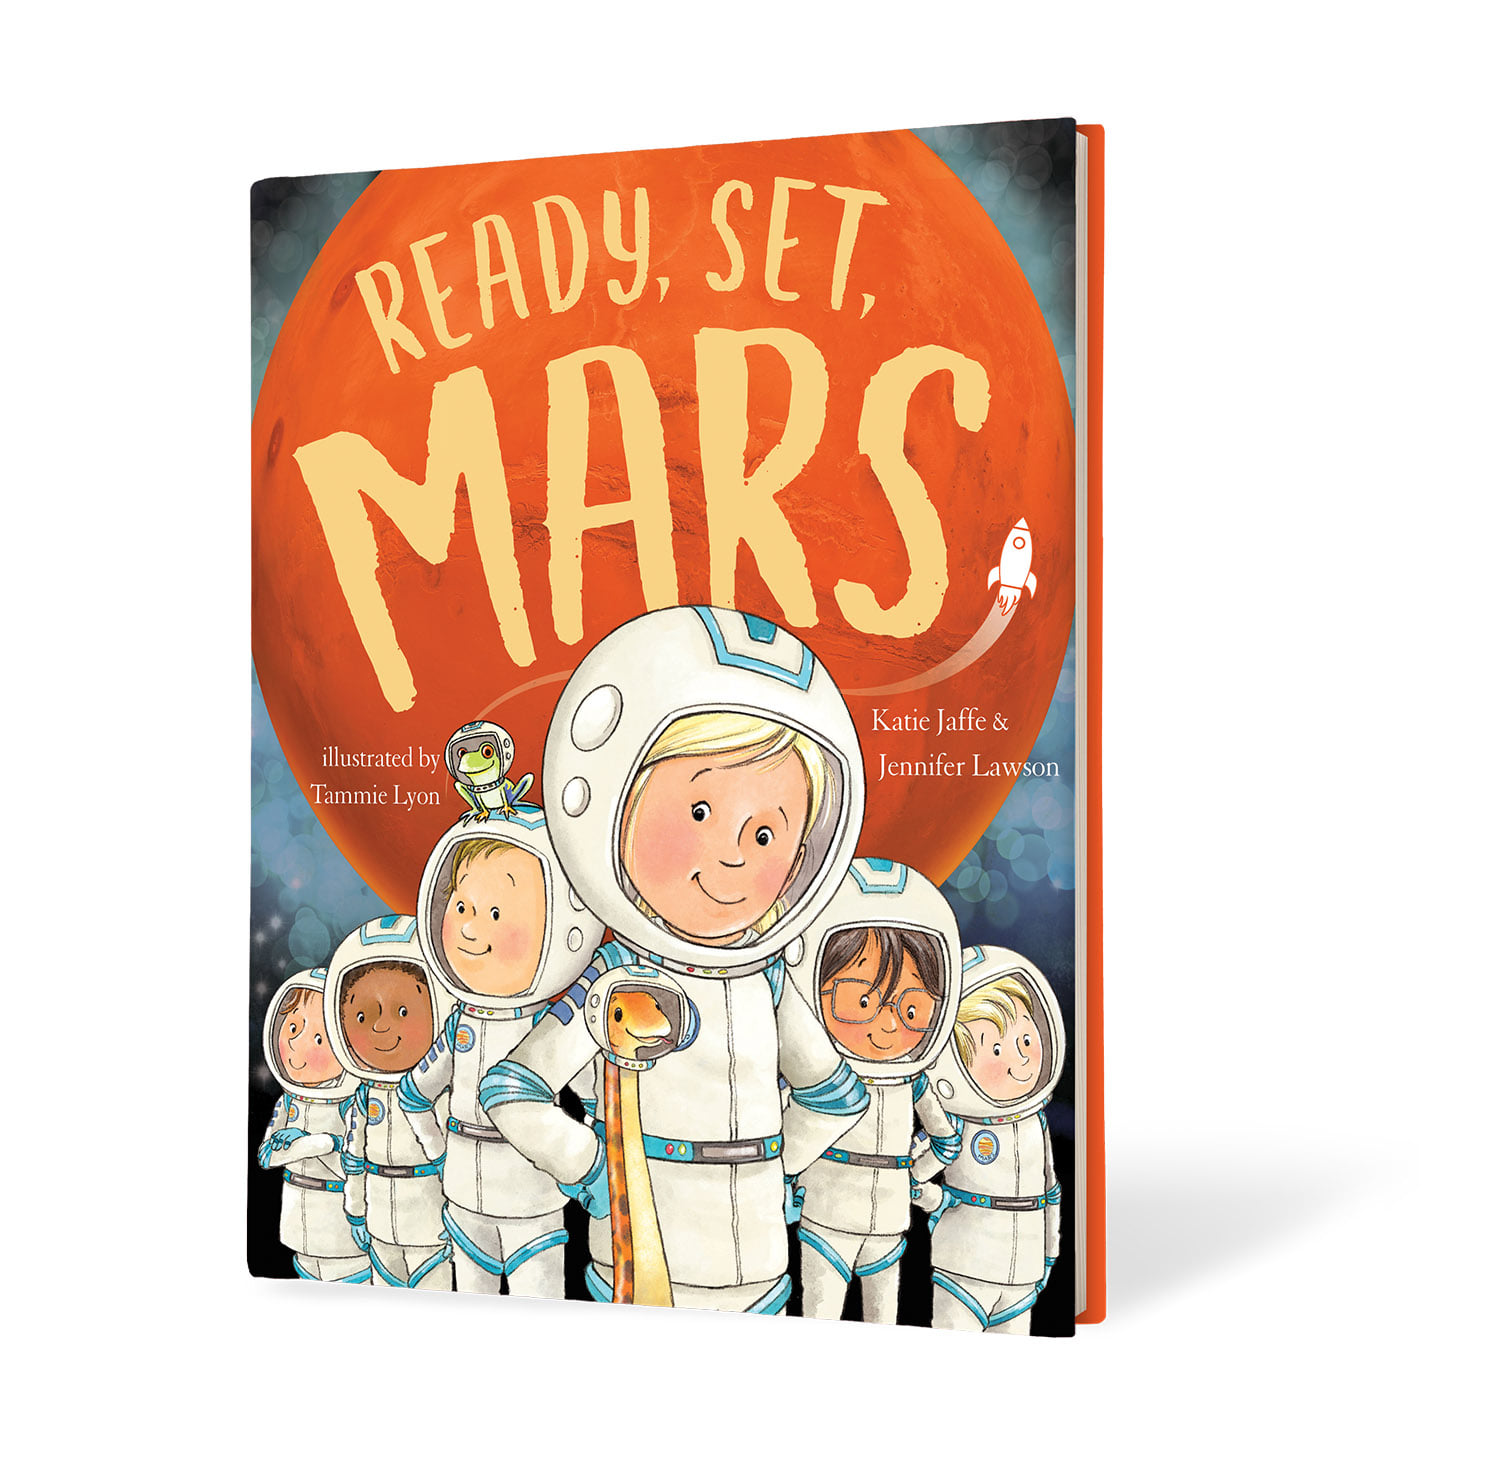 Sneak Peek at my latest book – Ready, Set, Mars !